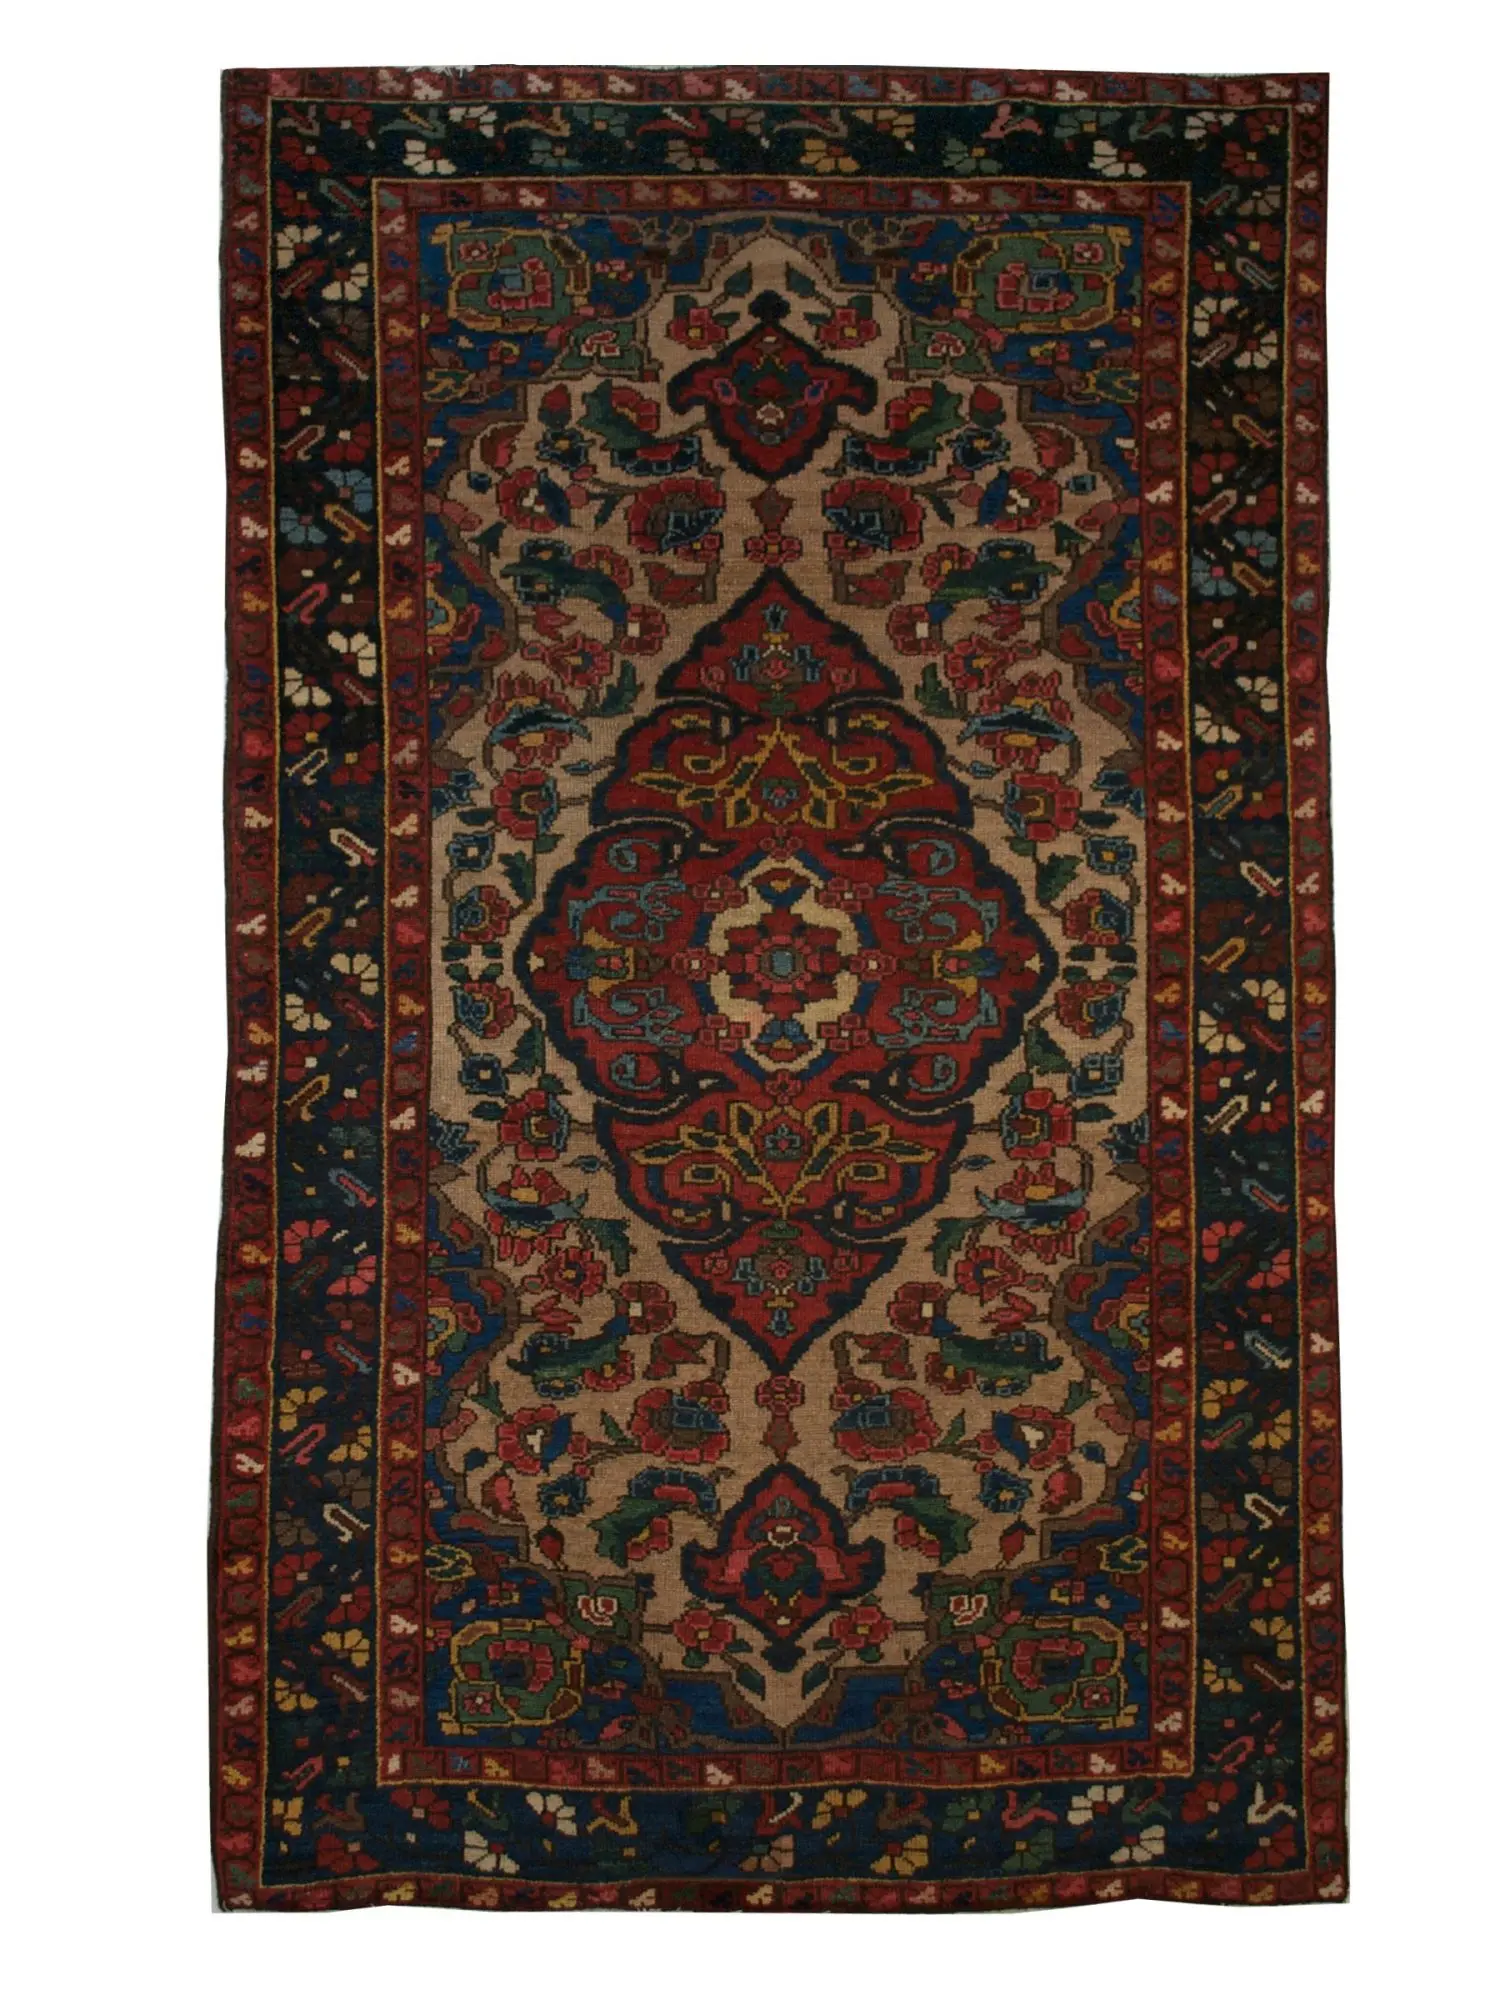 Antique Persian Bakhtiari rug 3' 11" x 6' 7" Handmade Wool Area Rug - Shabahang Royal Carpet